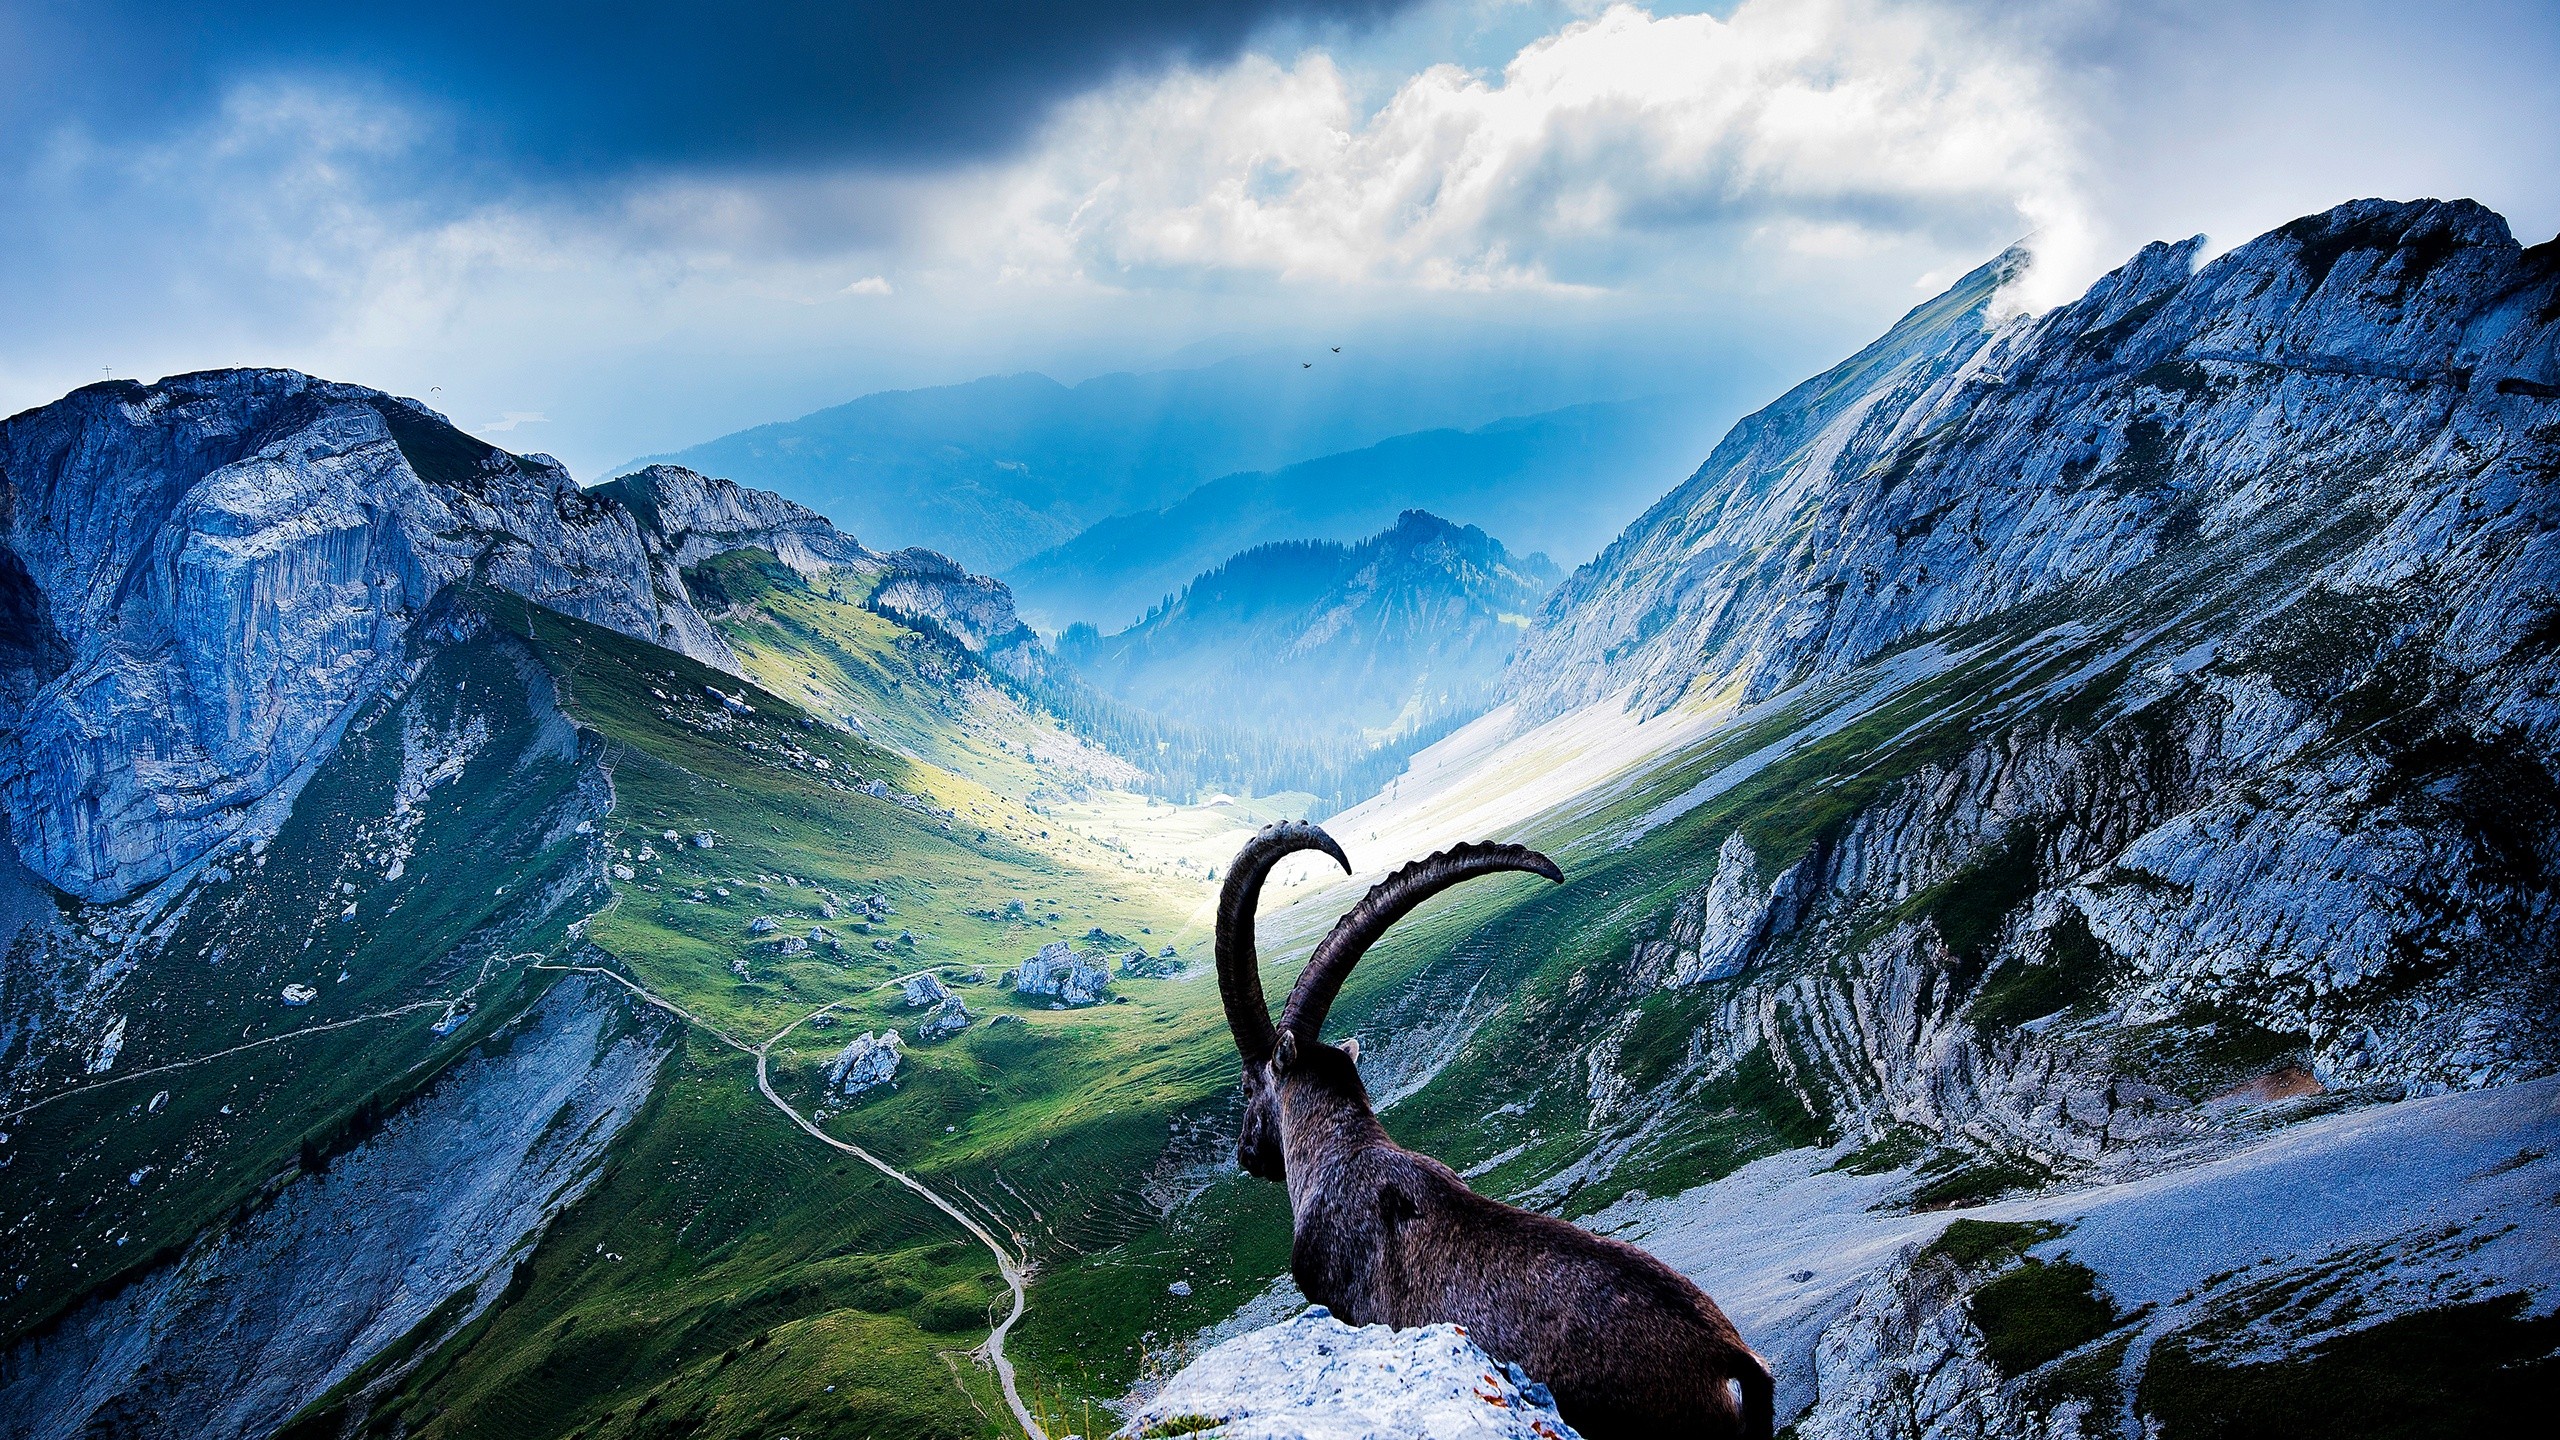 General 2560x1440 landscape mountains nature rocks animals mammals goats